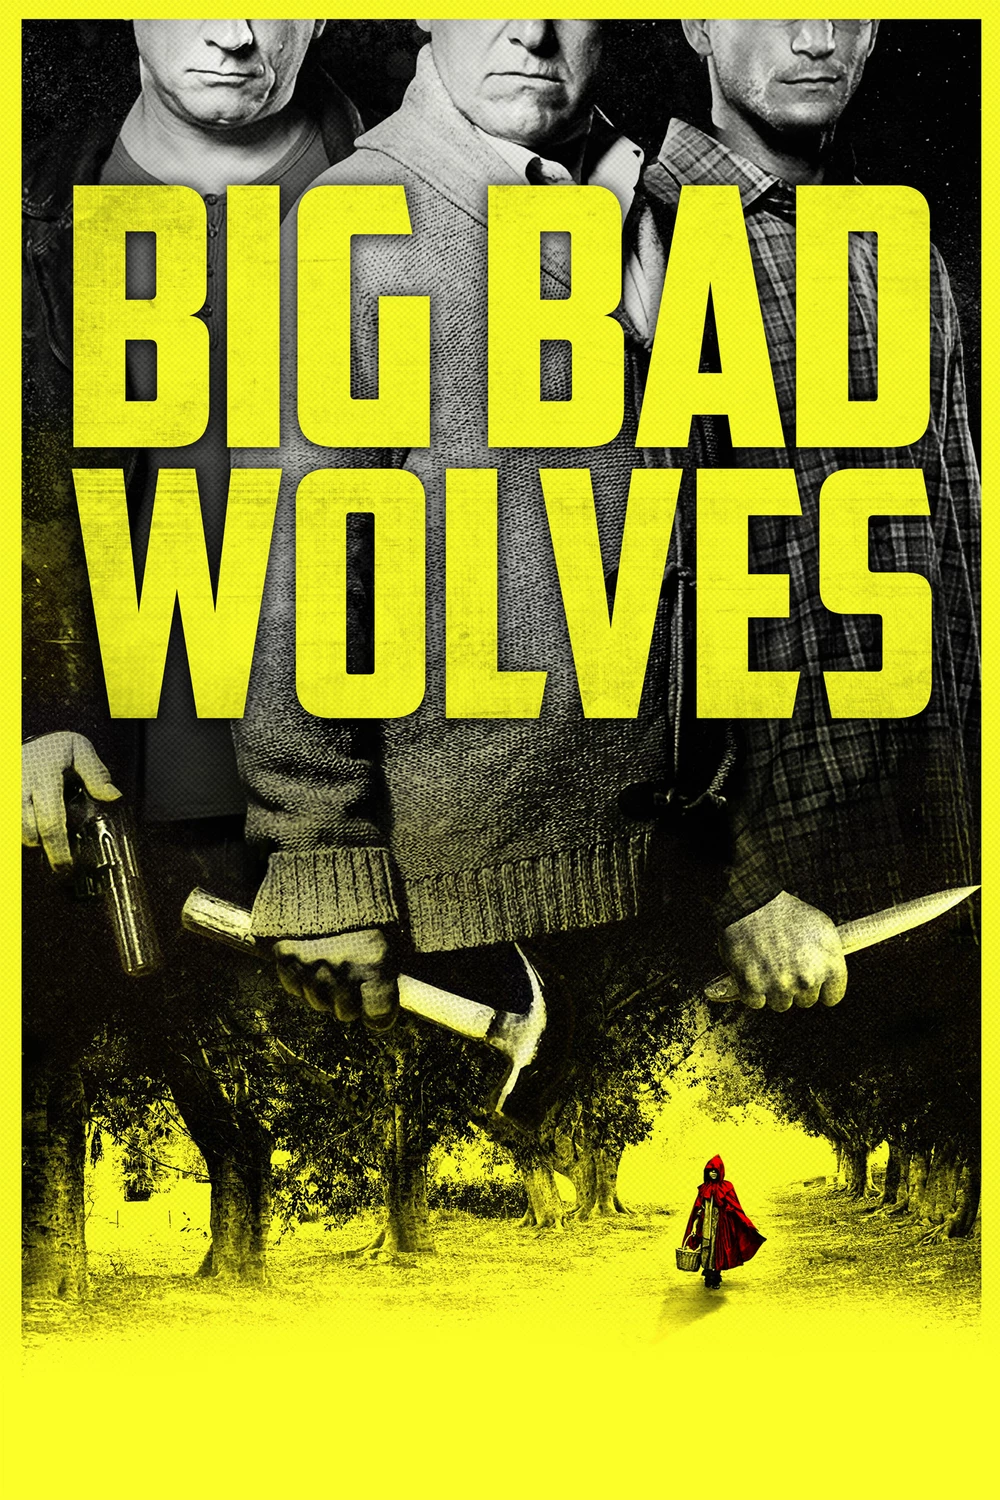 Big Bad Wolves: Στο Στόμα των Λύκων